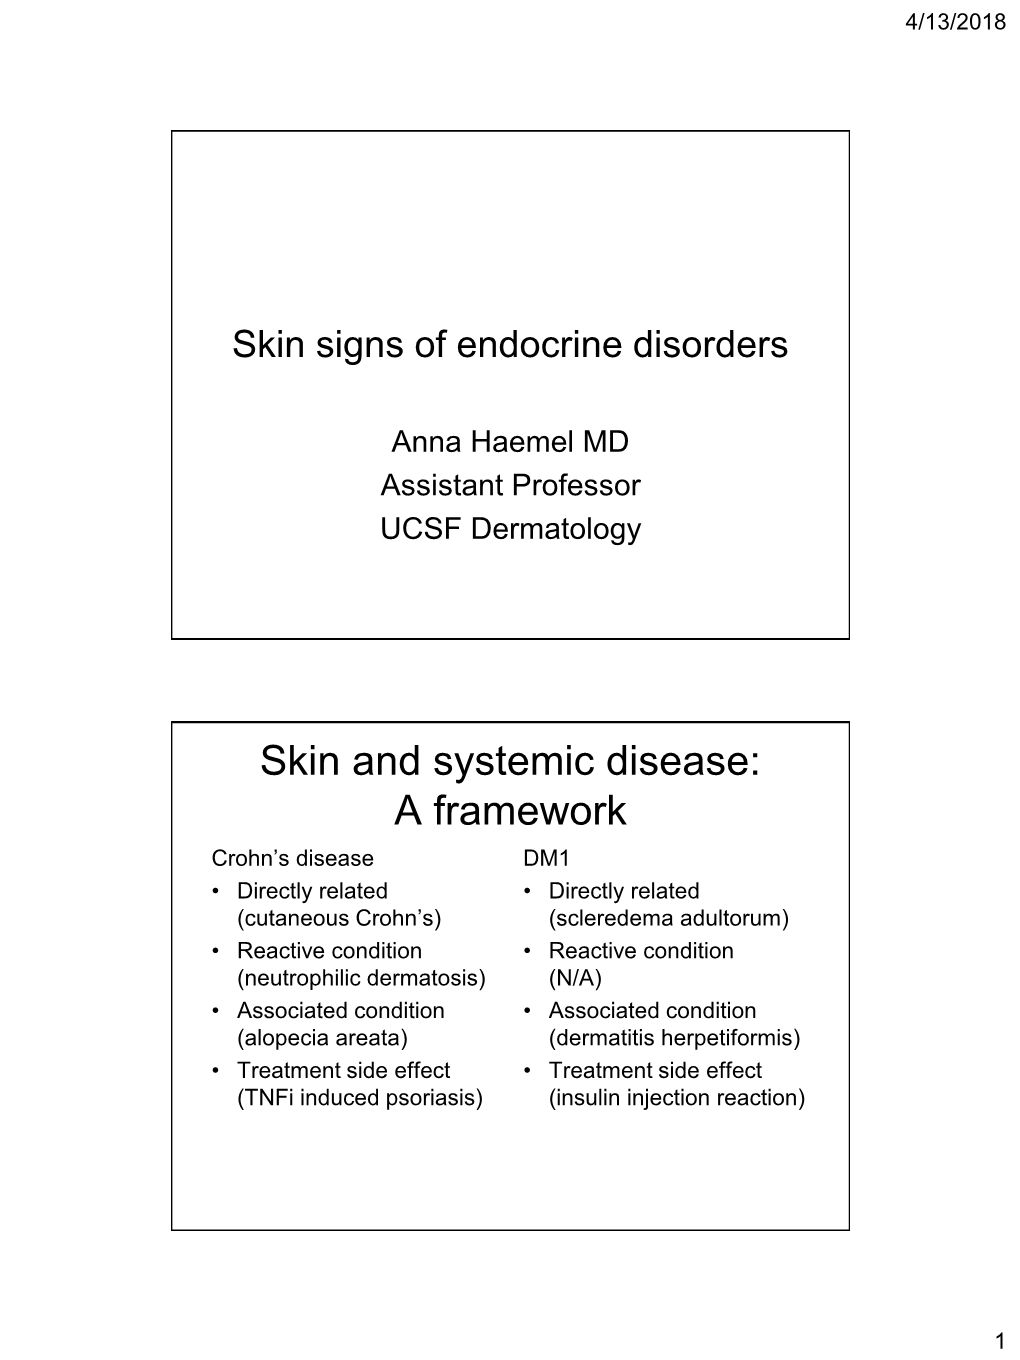 Skin Signs of Endocrine Disorders